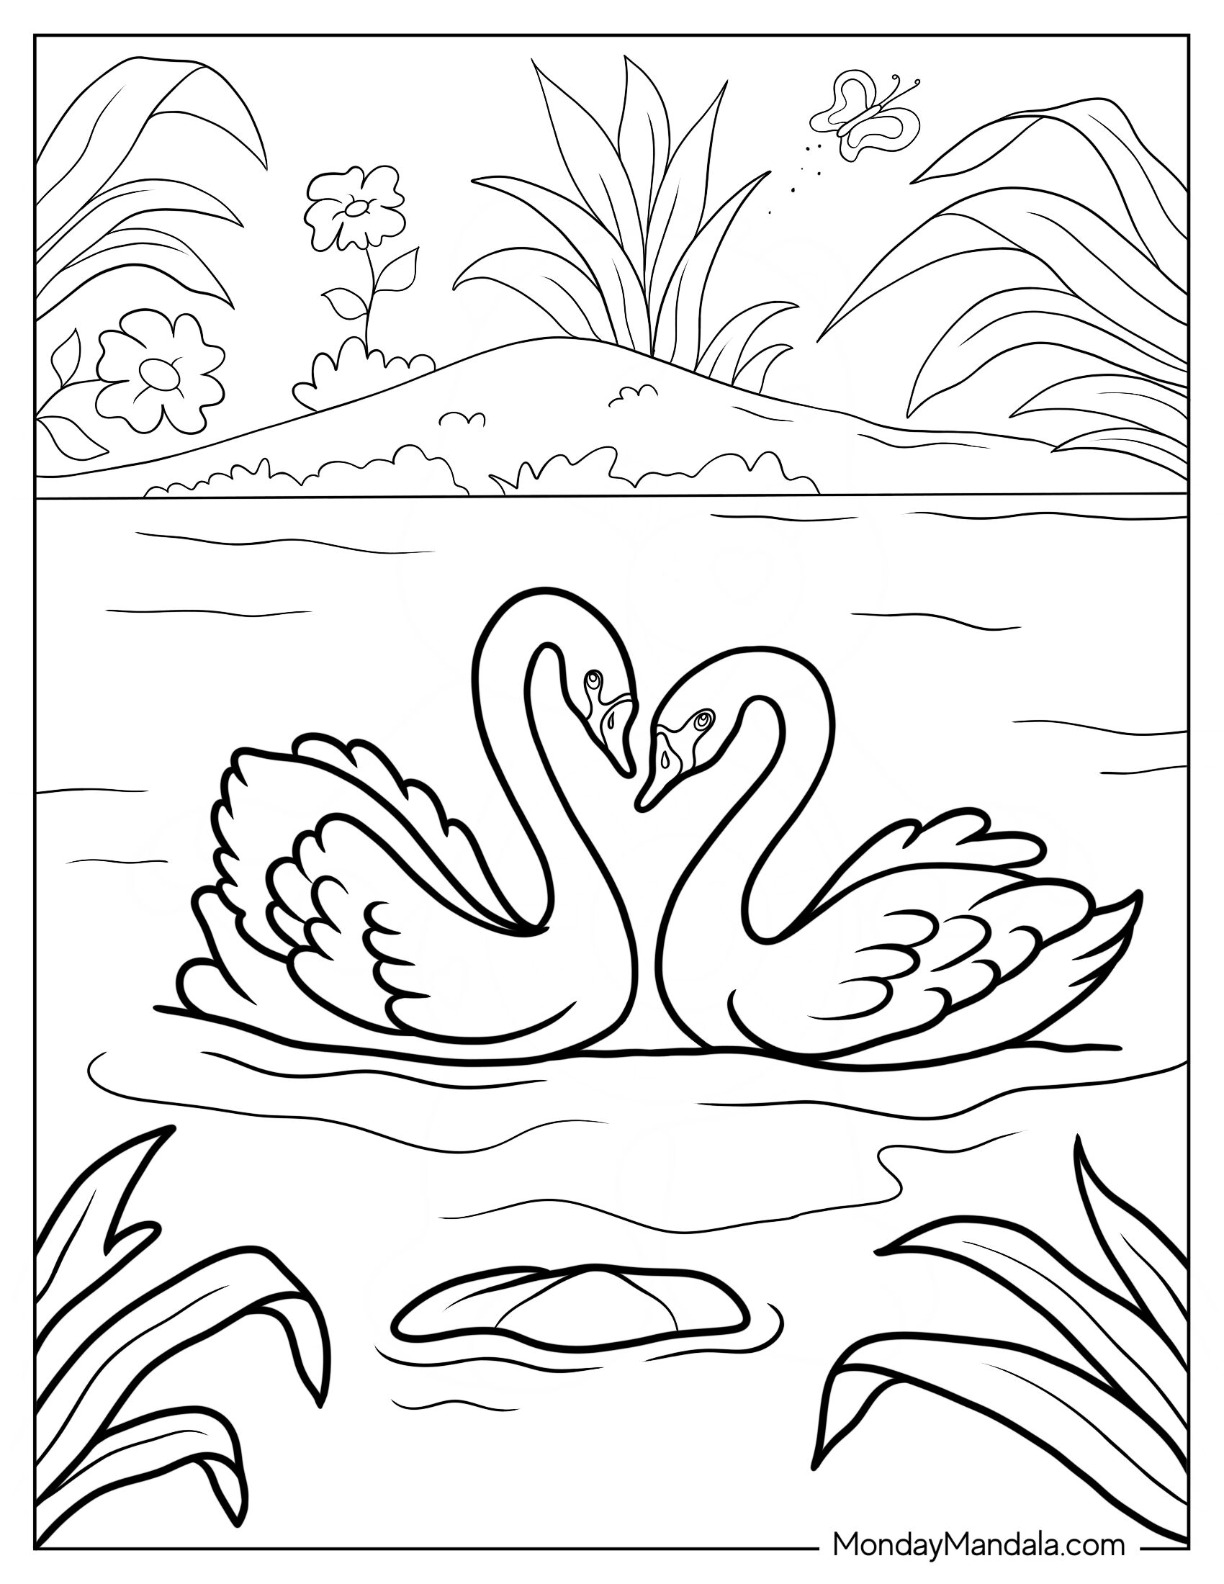 Swan coloring pages free pdf printables